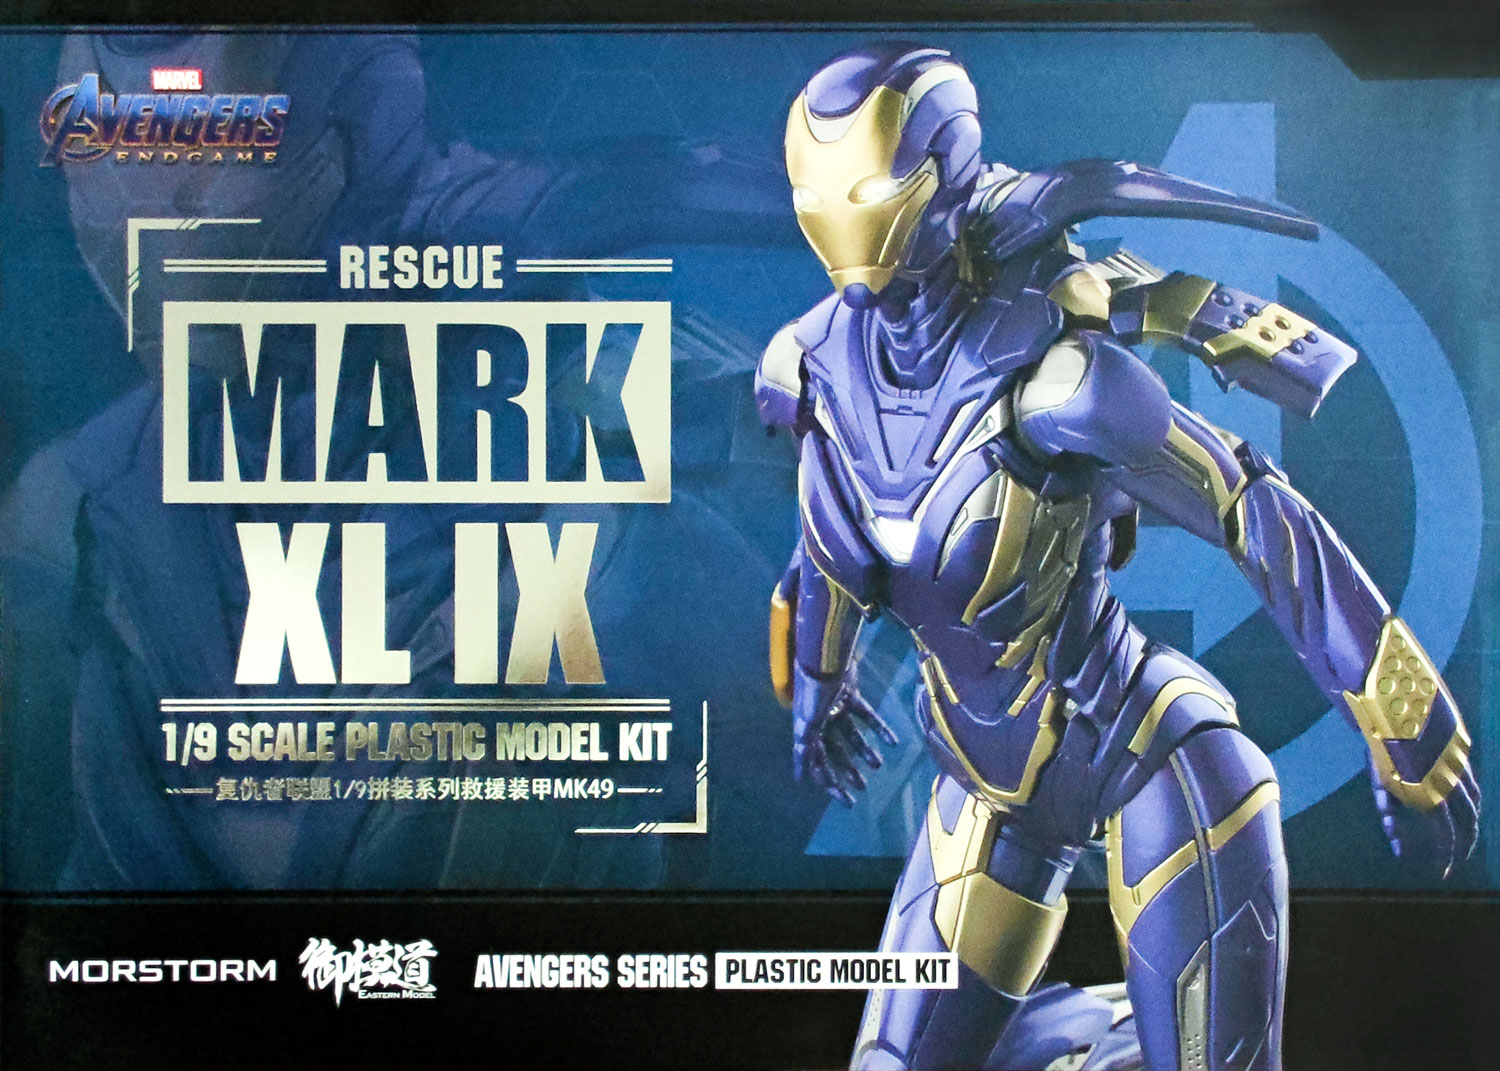 MORSTROM 1/9 Rescue Mark XLIX (Deluxe Edition)